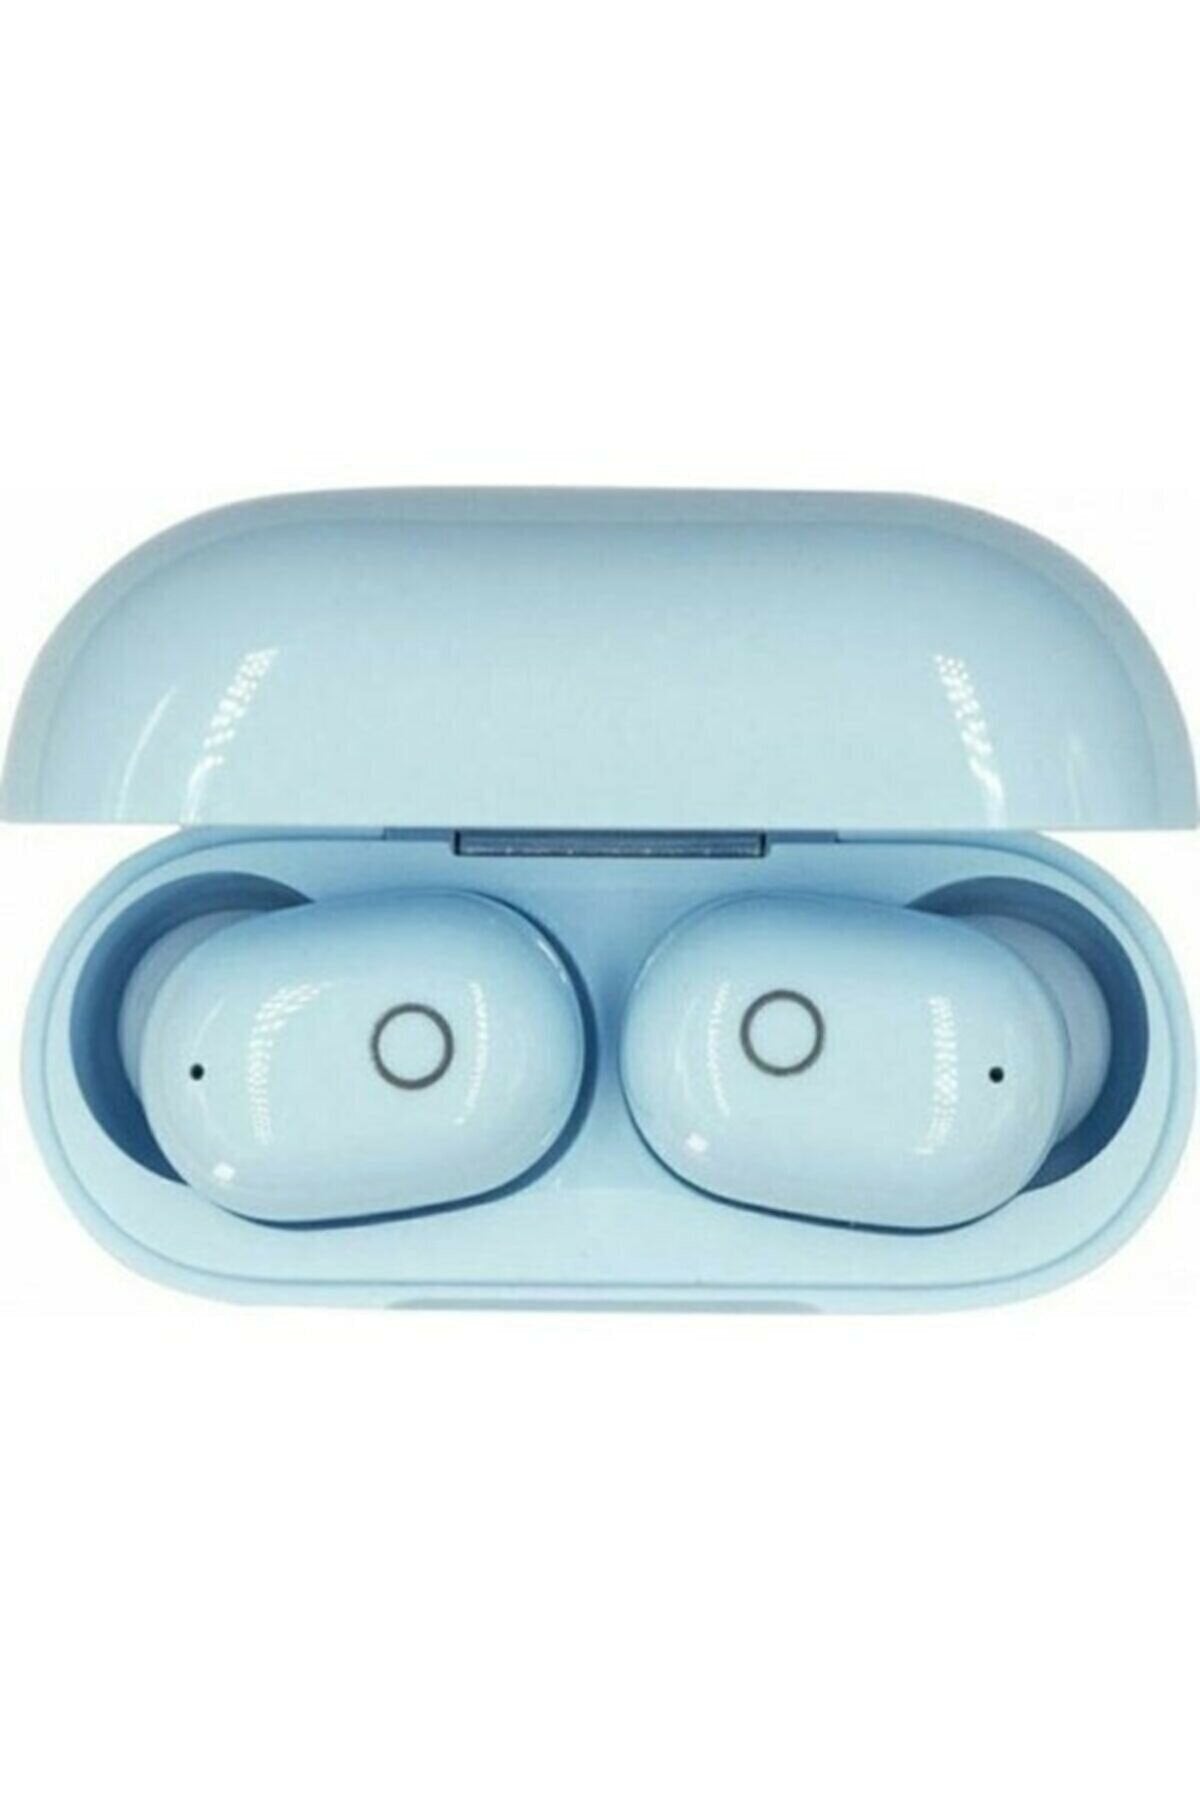 Mi Earbuds Basic Tws 16 Bluetooth Mini Kulakiçi Kulaklık A Kalite xiaomikulaklık